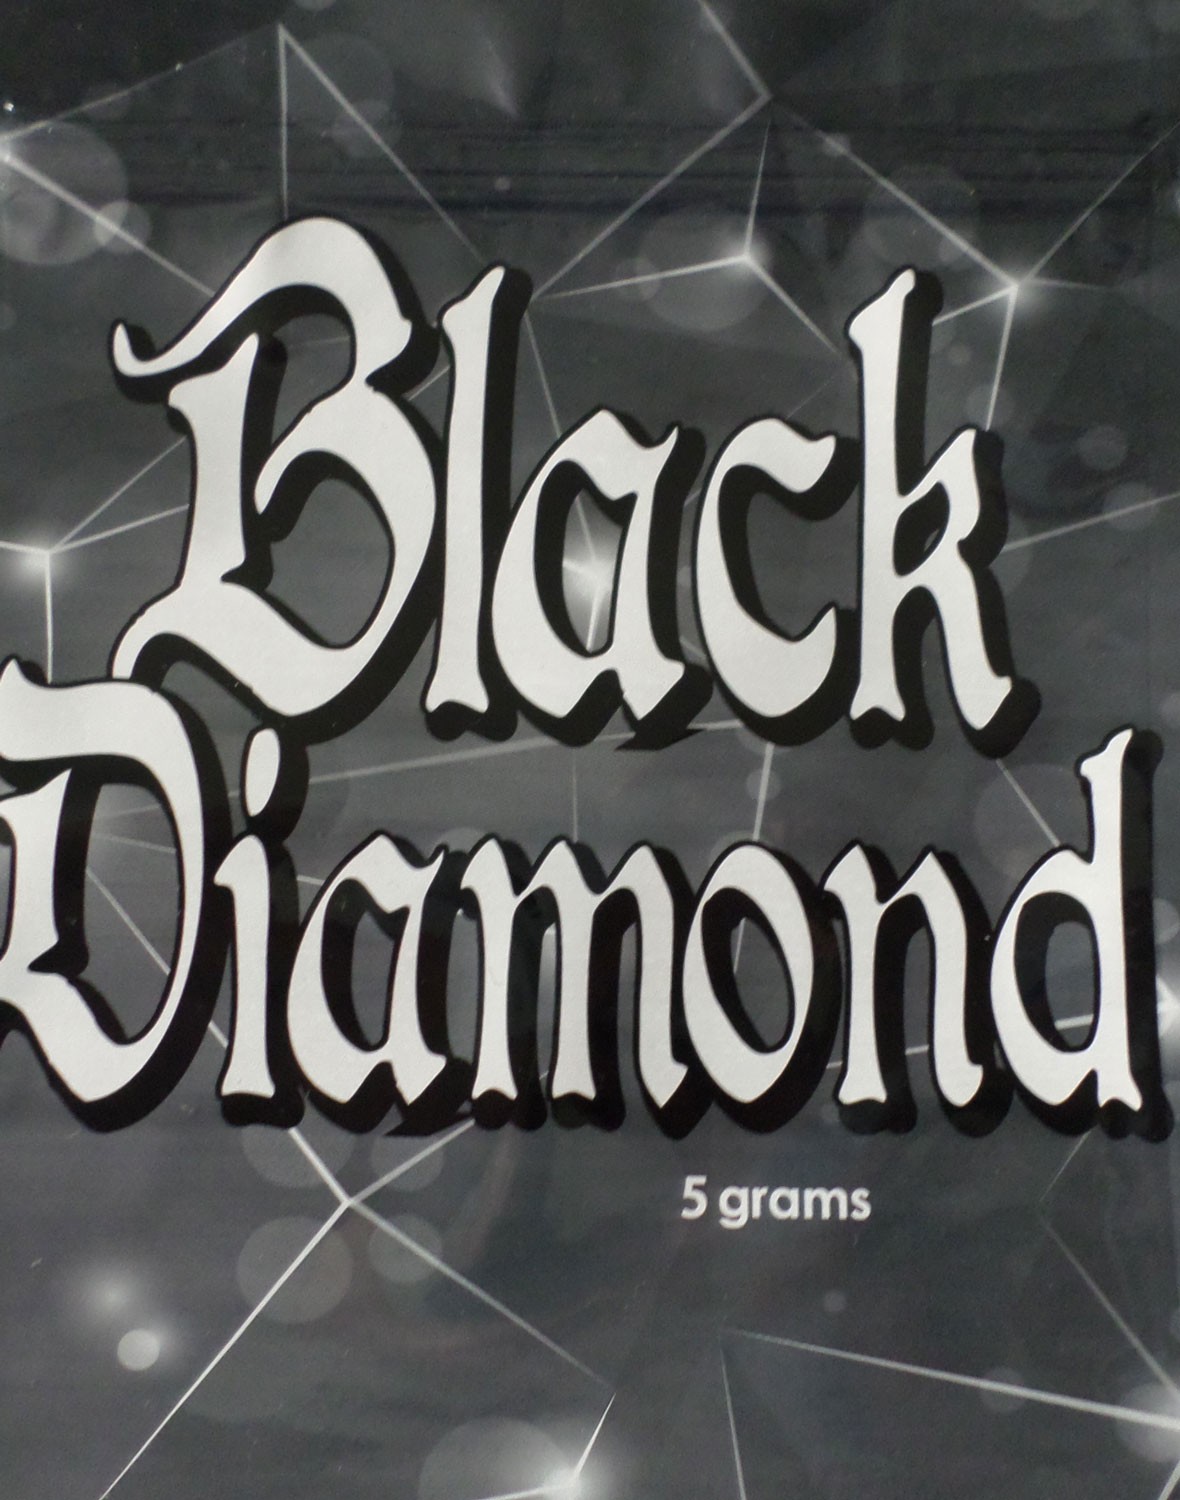 Black Diamond 5g incense